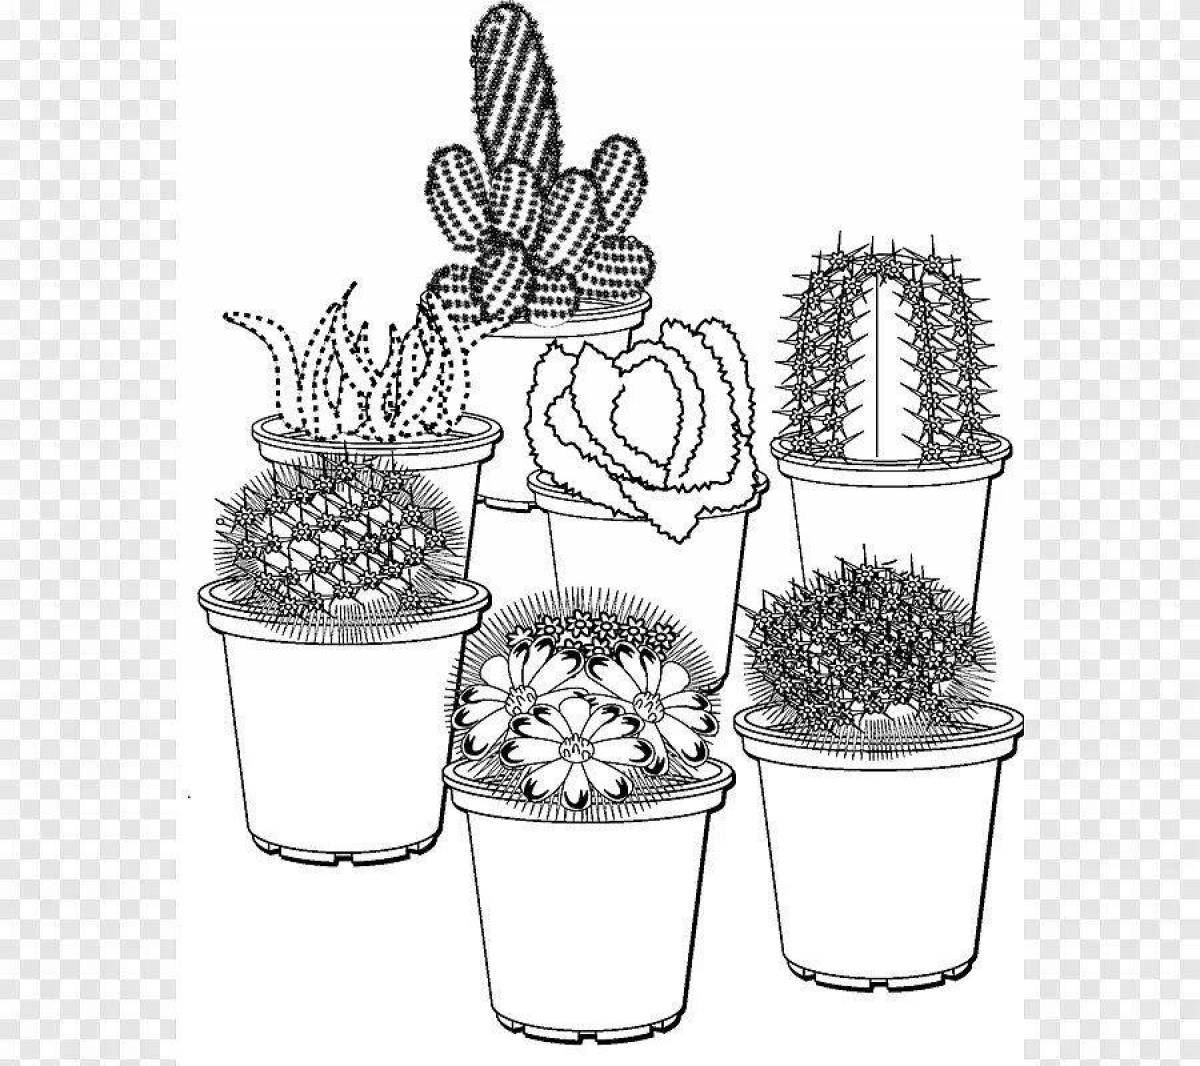 Bright cactus in a pot